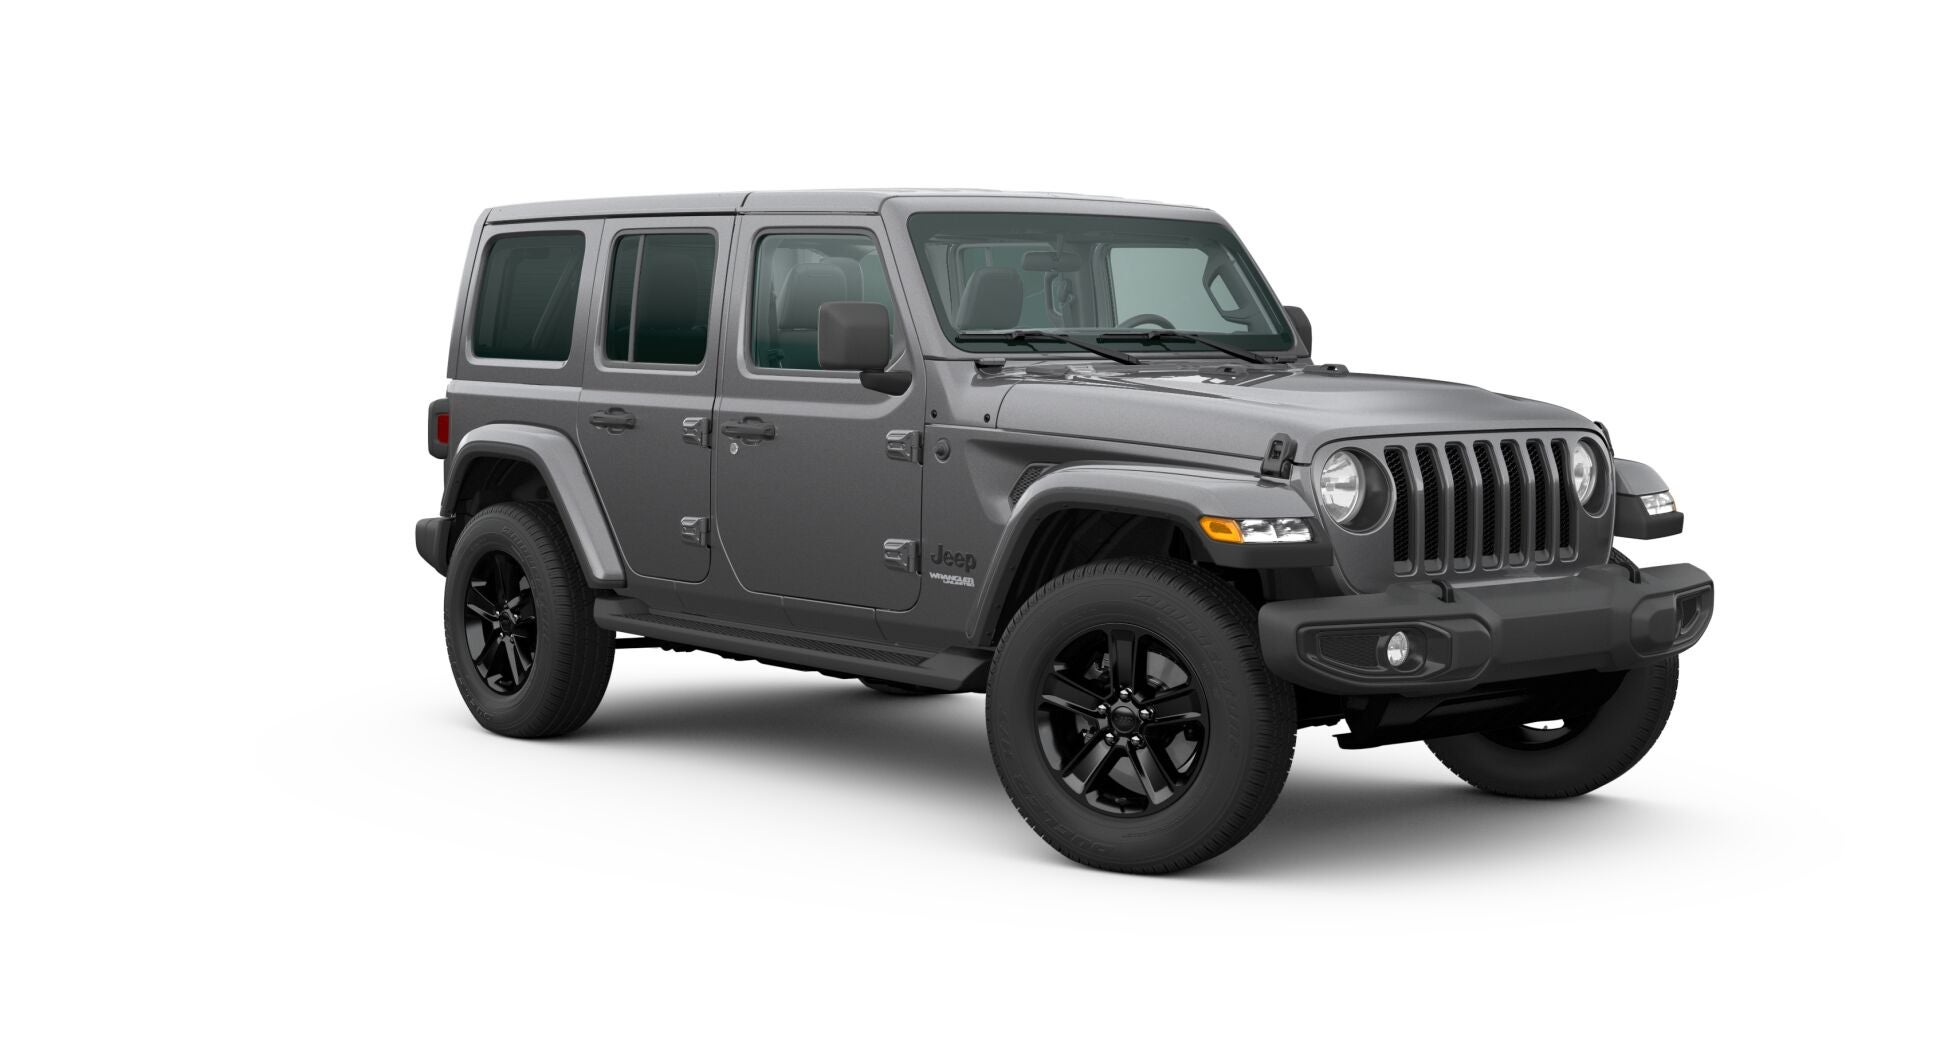 2020 Jeep Wrangler Trim Options Explained: Rubicon, Unlimited, Sahara